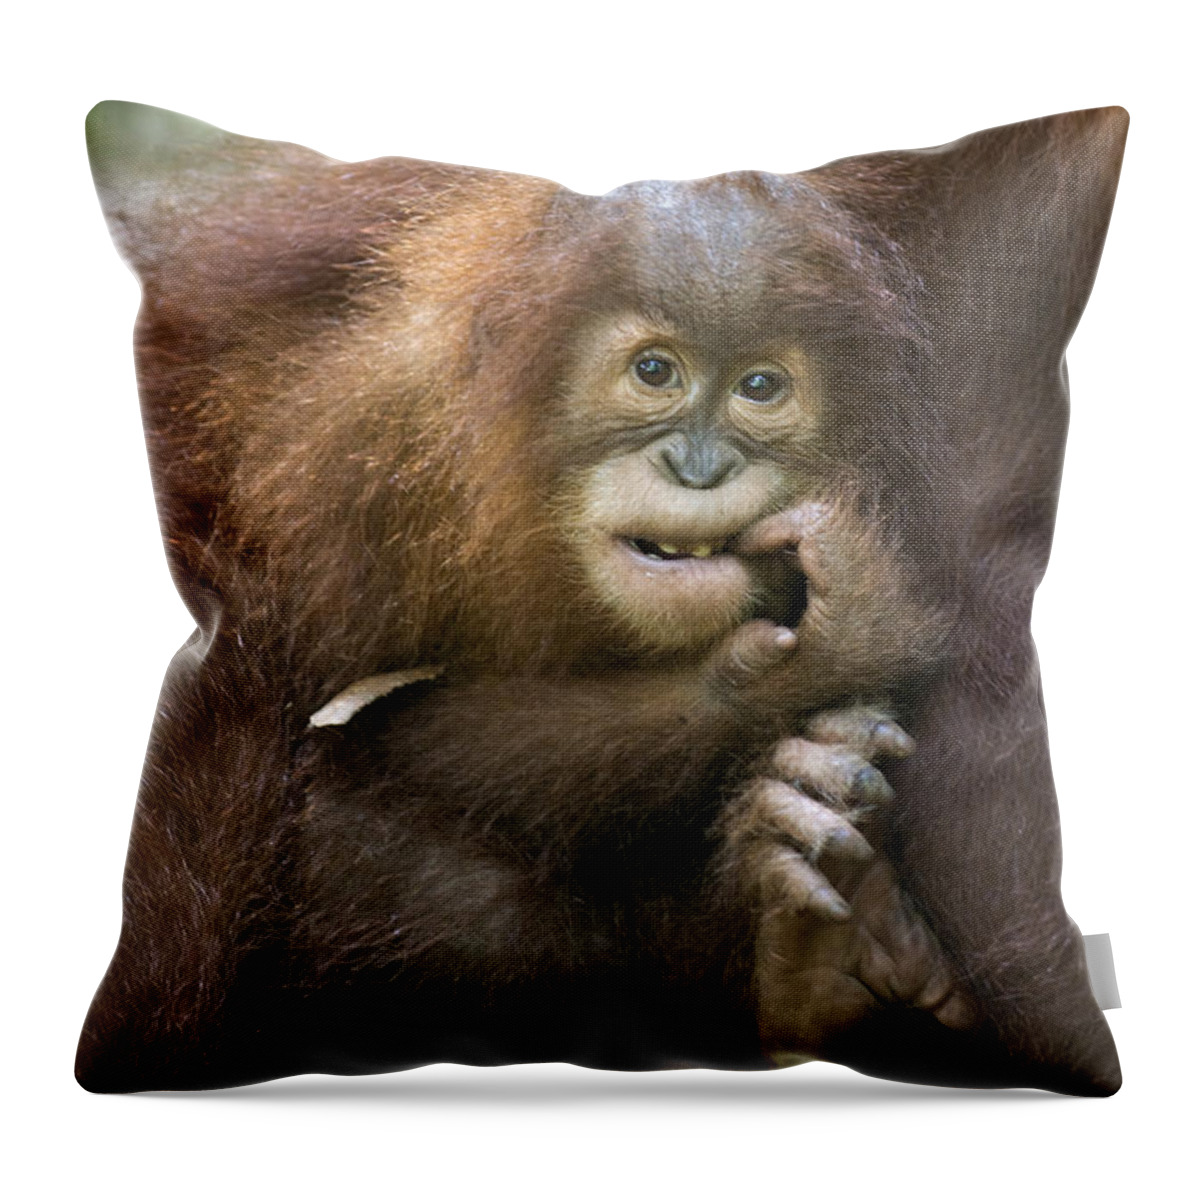 00443965 Throw Pillow featuring the photograph Sumatran Orangutan 2.5 Year Old Baby by Suzi Eszterhas